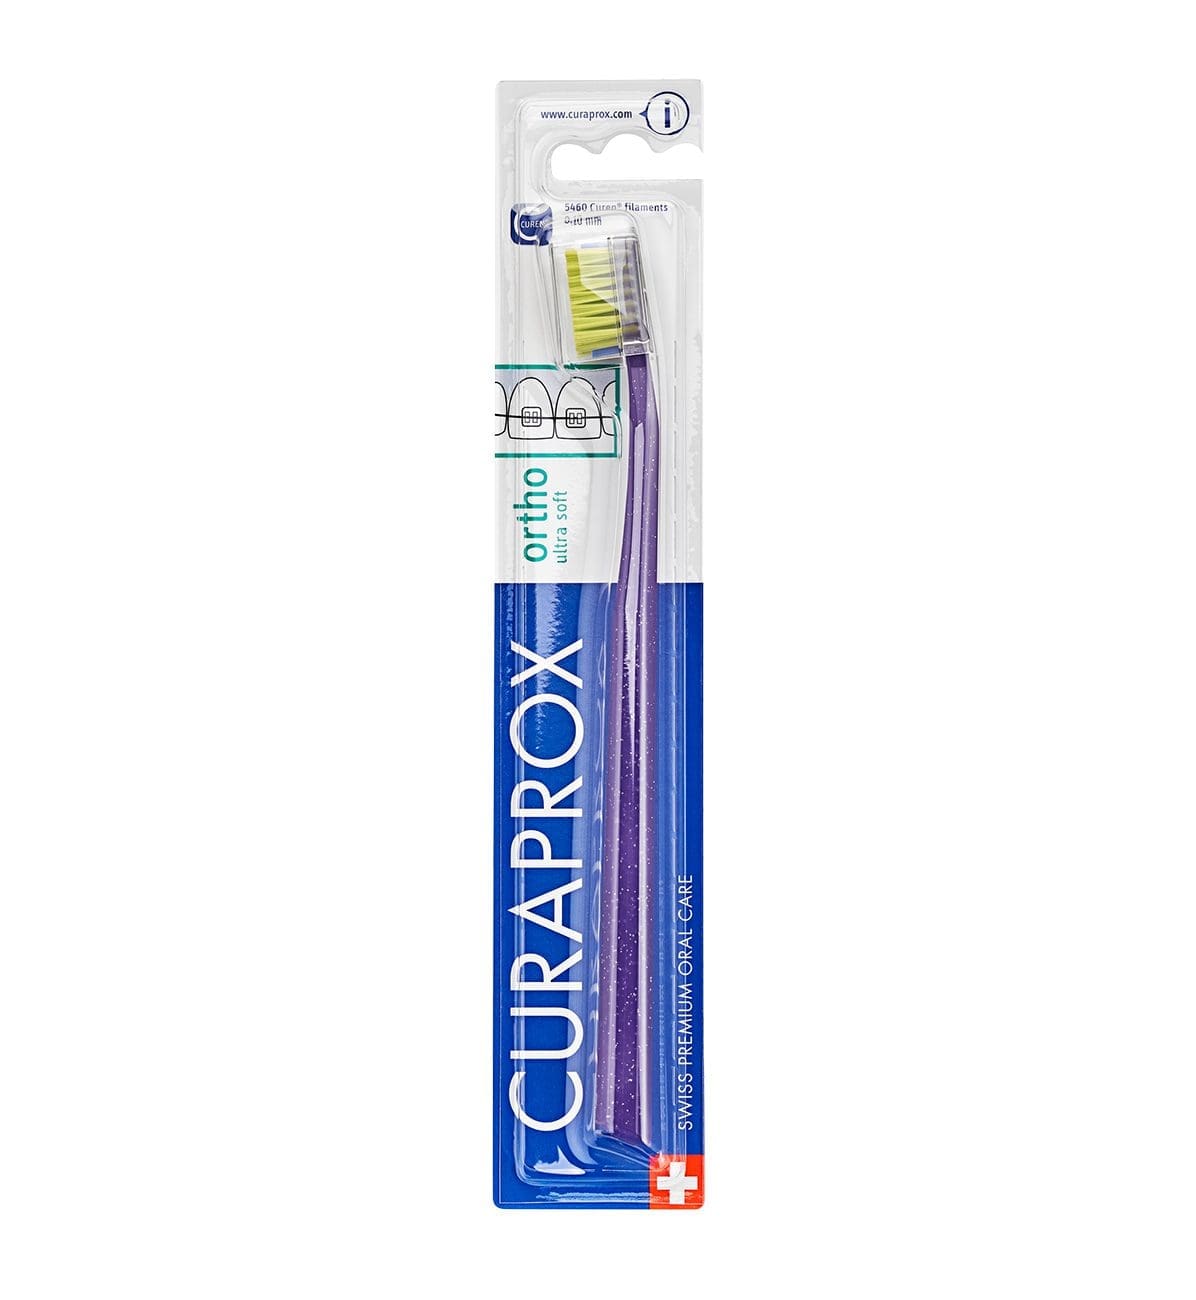 Curaprox Toothbrush Cs 5460 Ortho